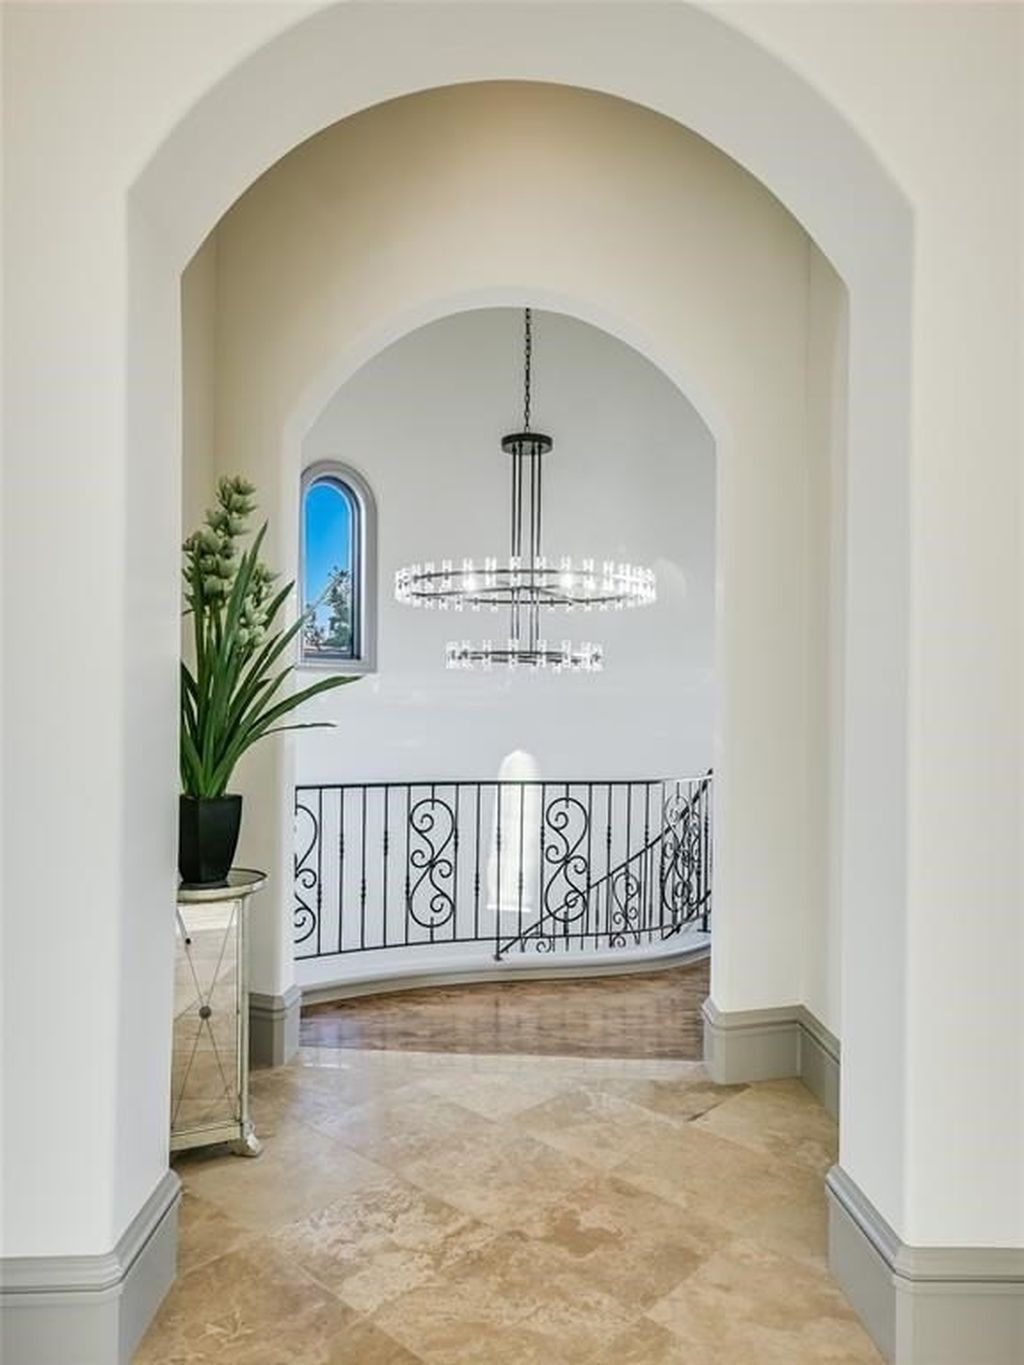 Captivating mediterranean santa barbara style residence with marina views in austin texas priced at 4848350 19